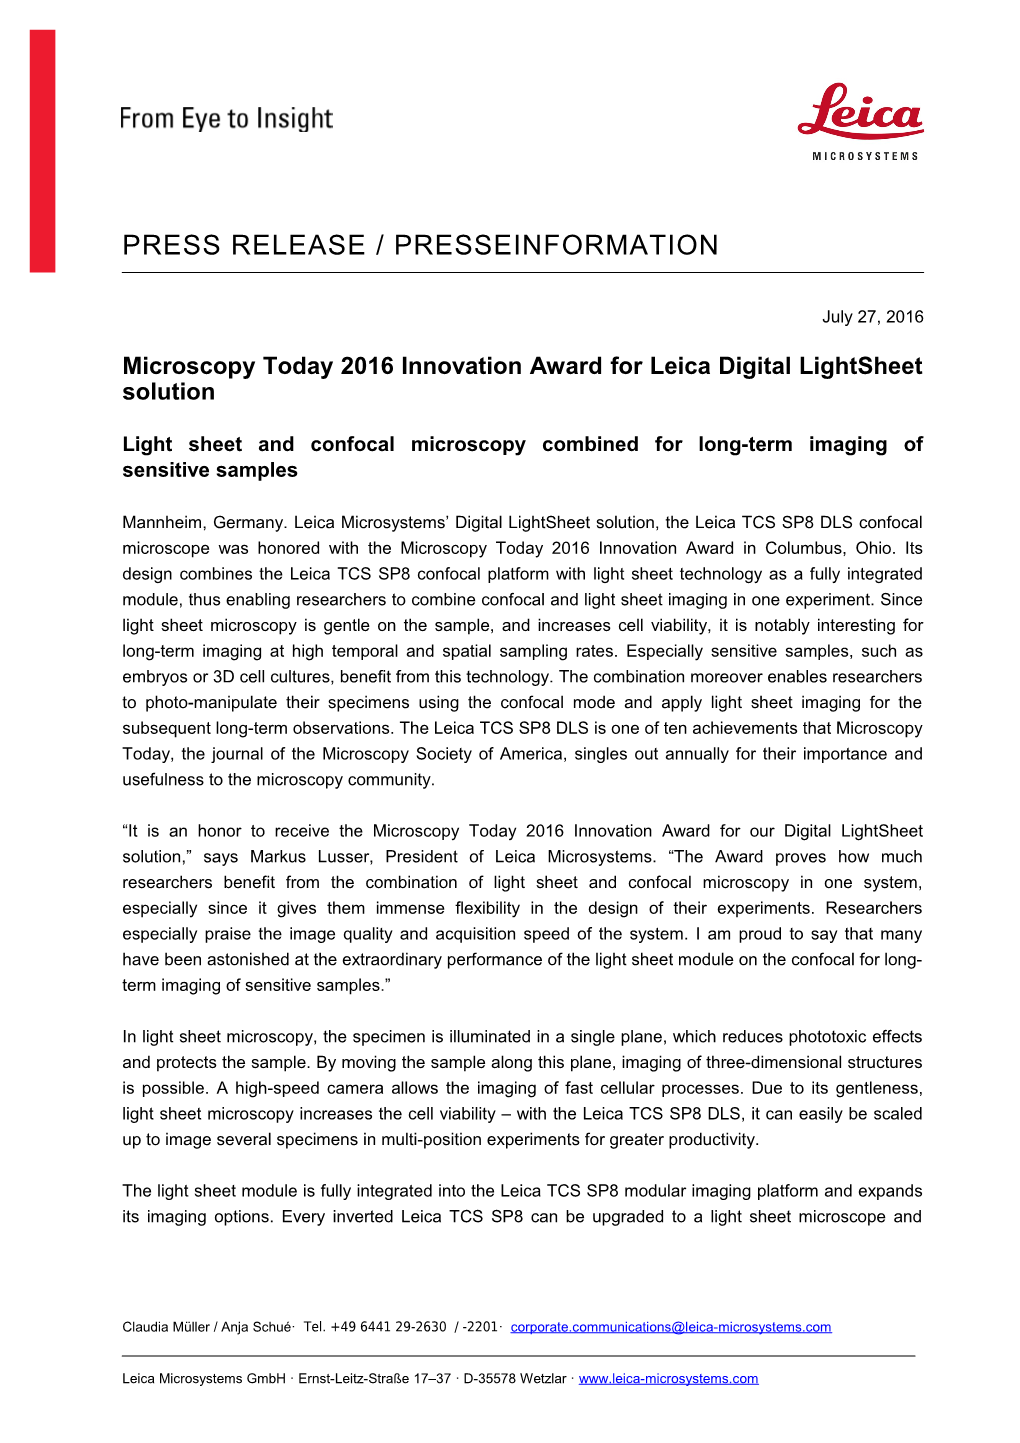 Microscopy Today 2016 Innovation Award for Leica Digital Lightsheet Solution